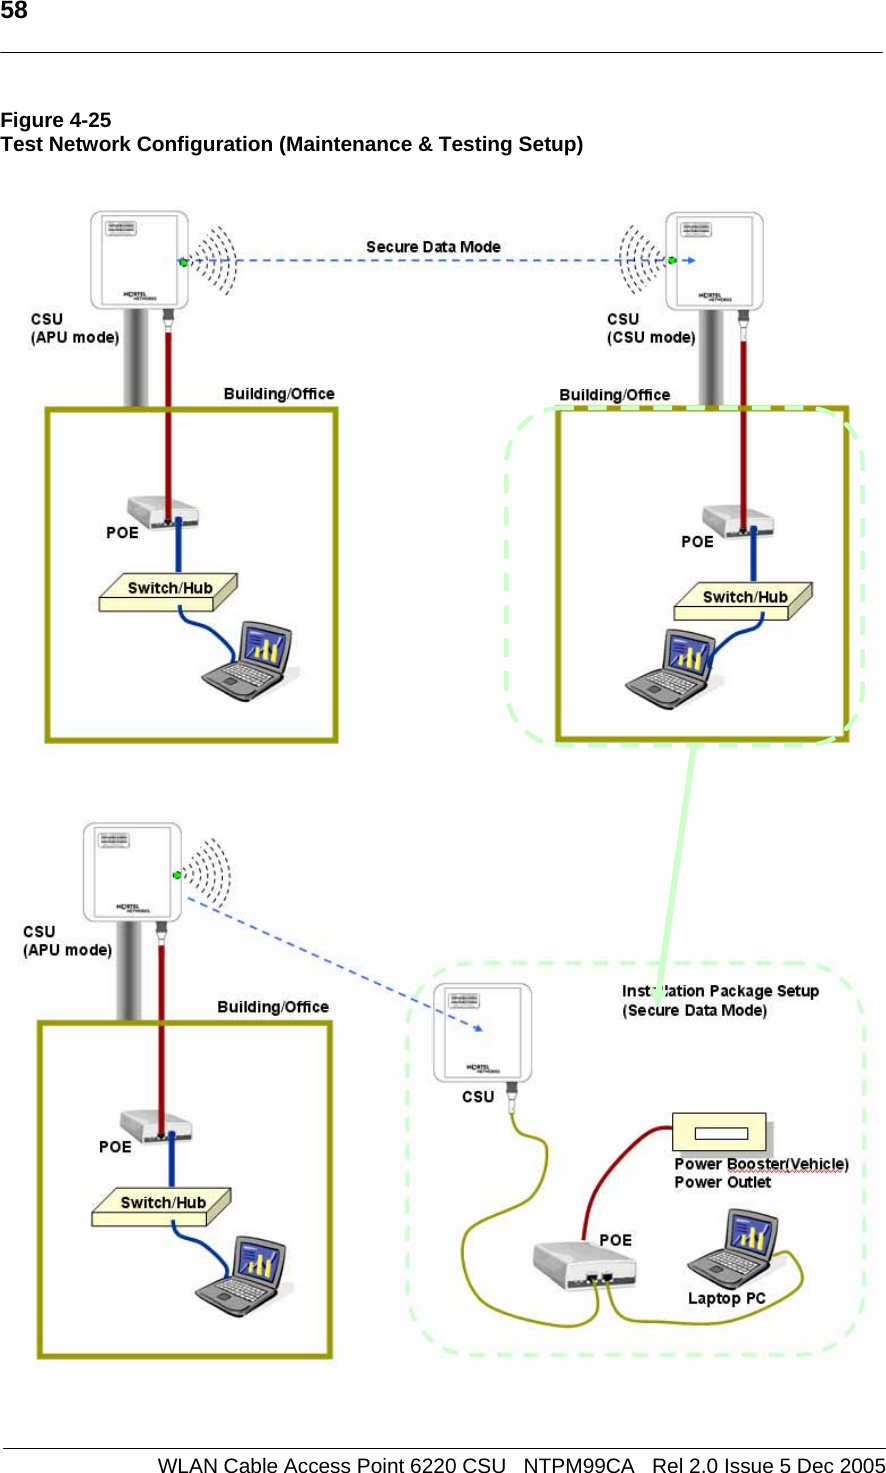   58  WLAN Cable Access Point 6220 CSU   NTPM99CA   Rel 2.0 Issue 5 Dec 2005 Figure 4-25 Test Network Configuration (Maintenance &amp; Testing Setup)        